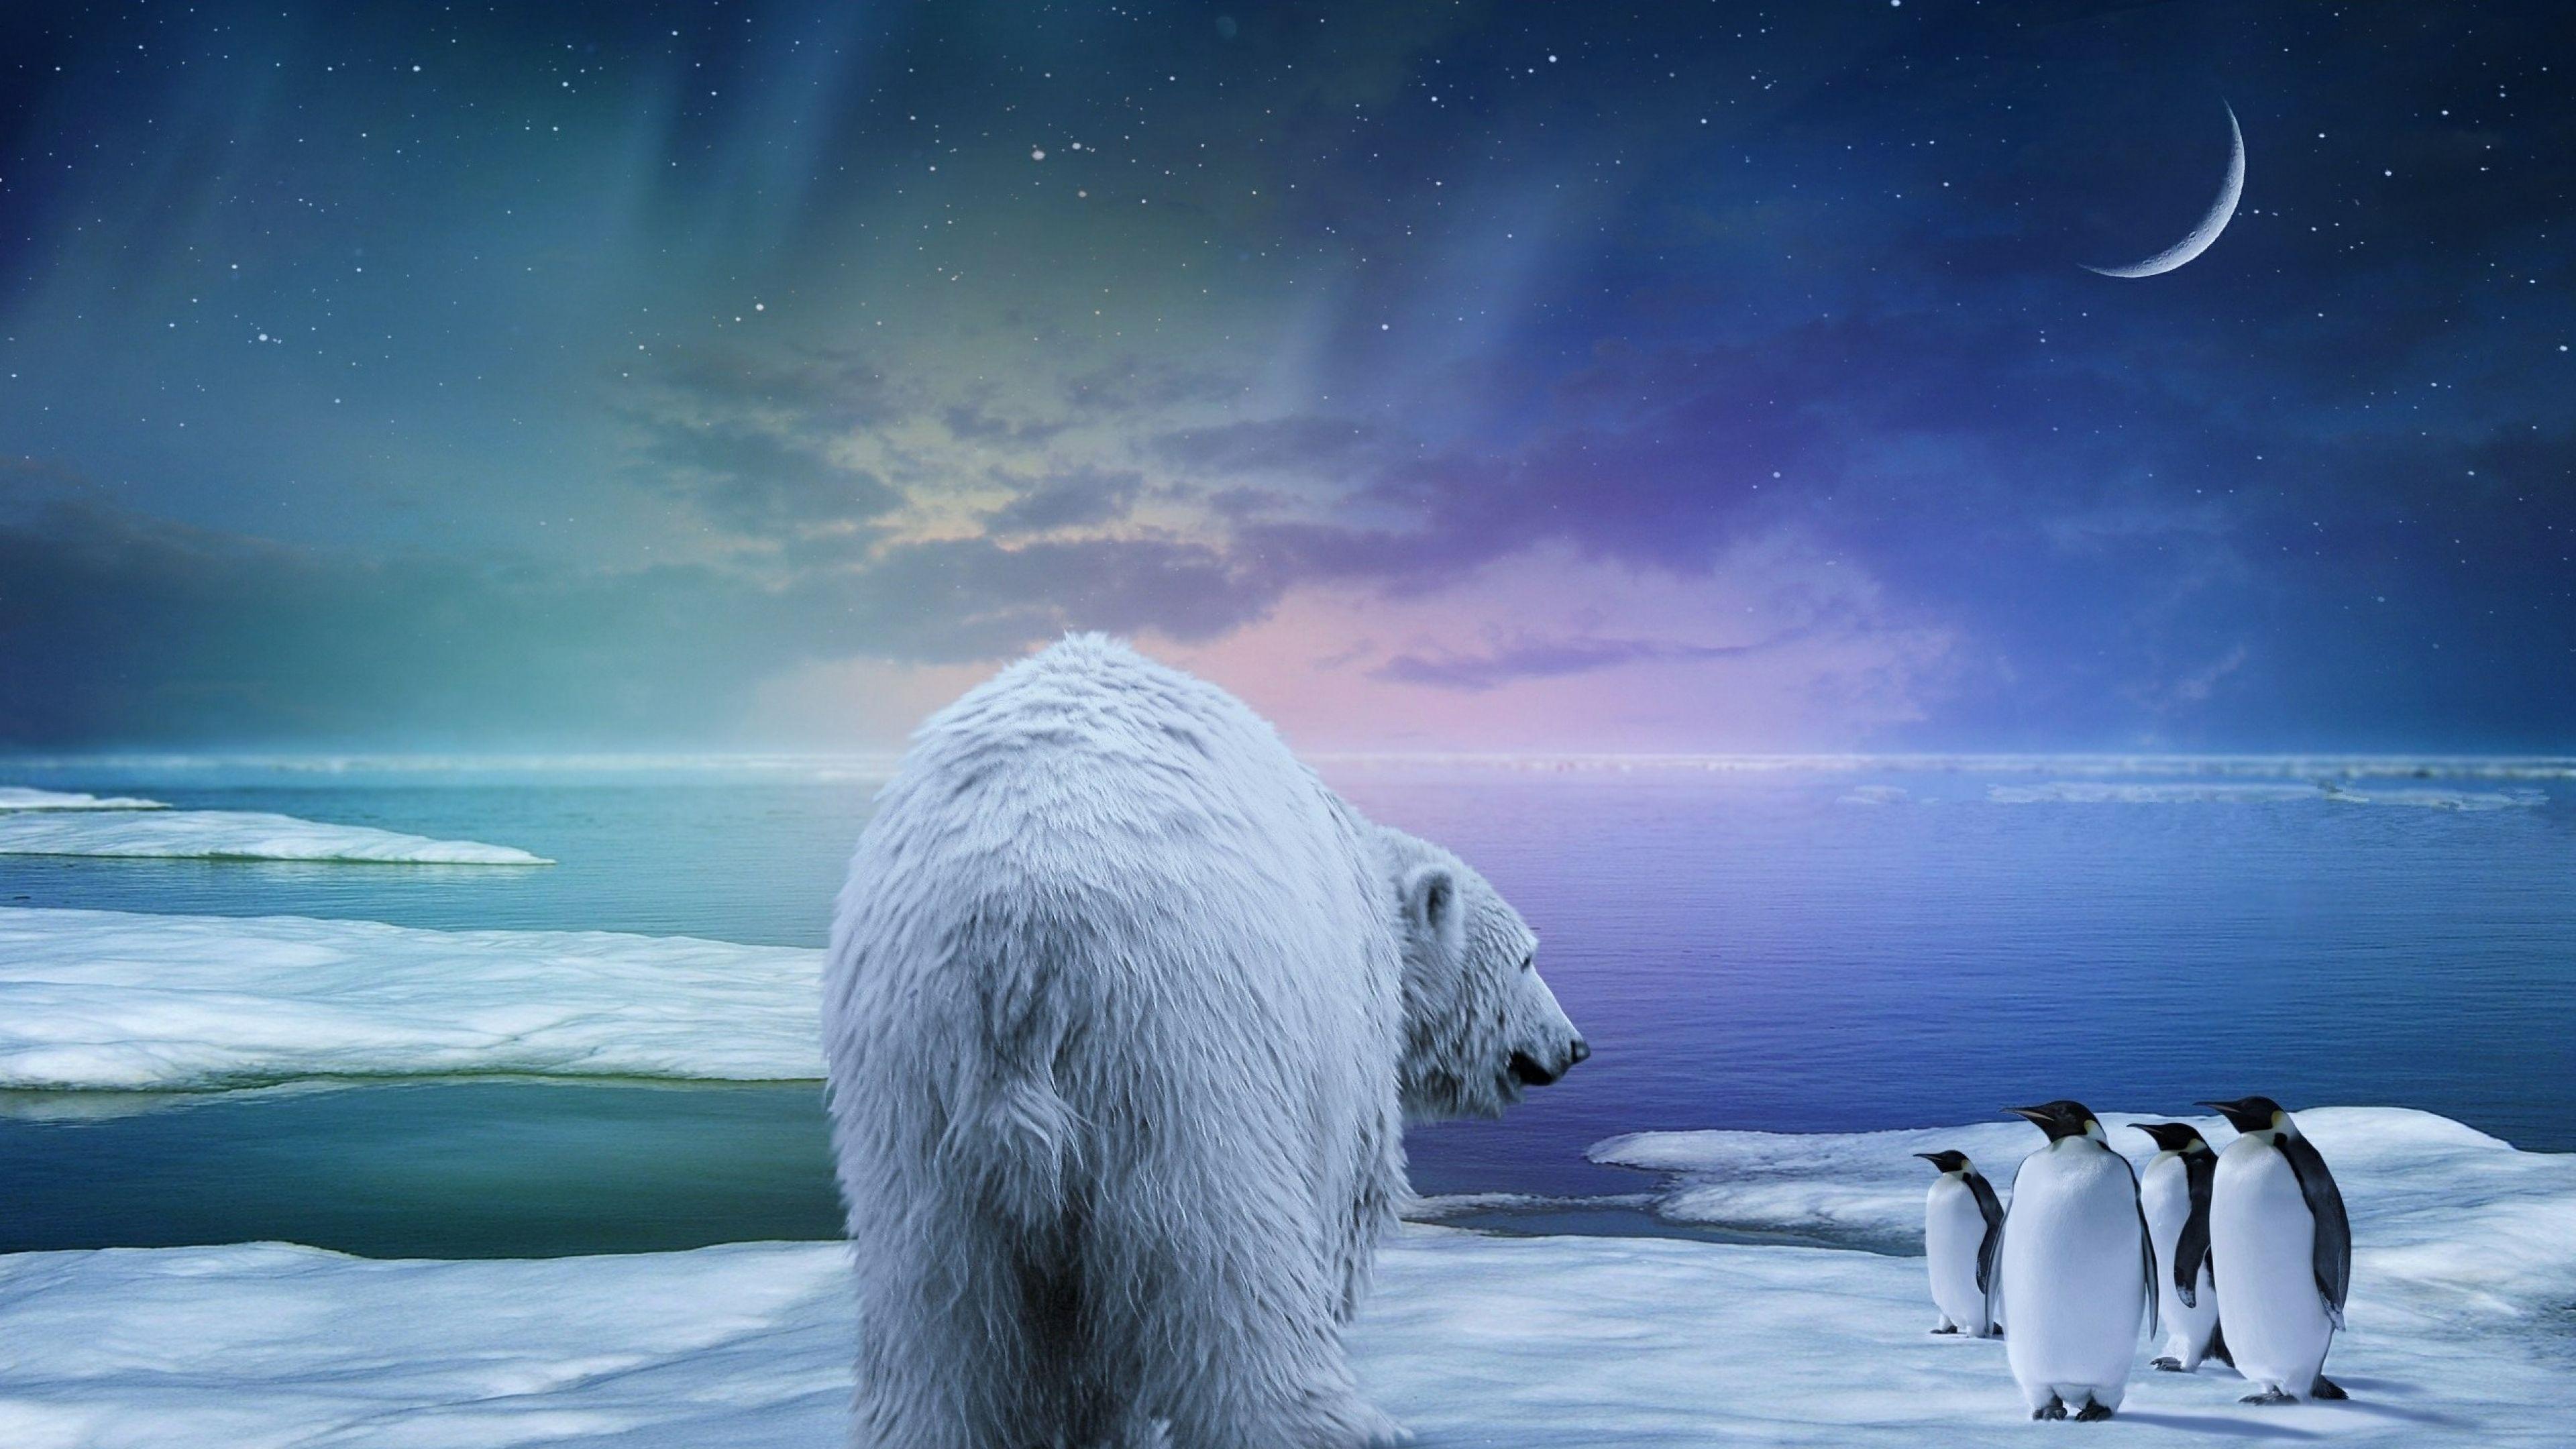 Download Wallpaper 3840x2160 Polar bear, Penguin, Northern lights